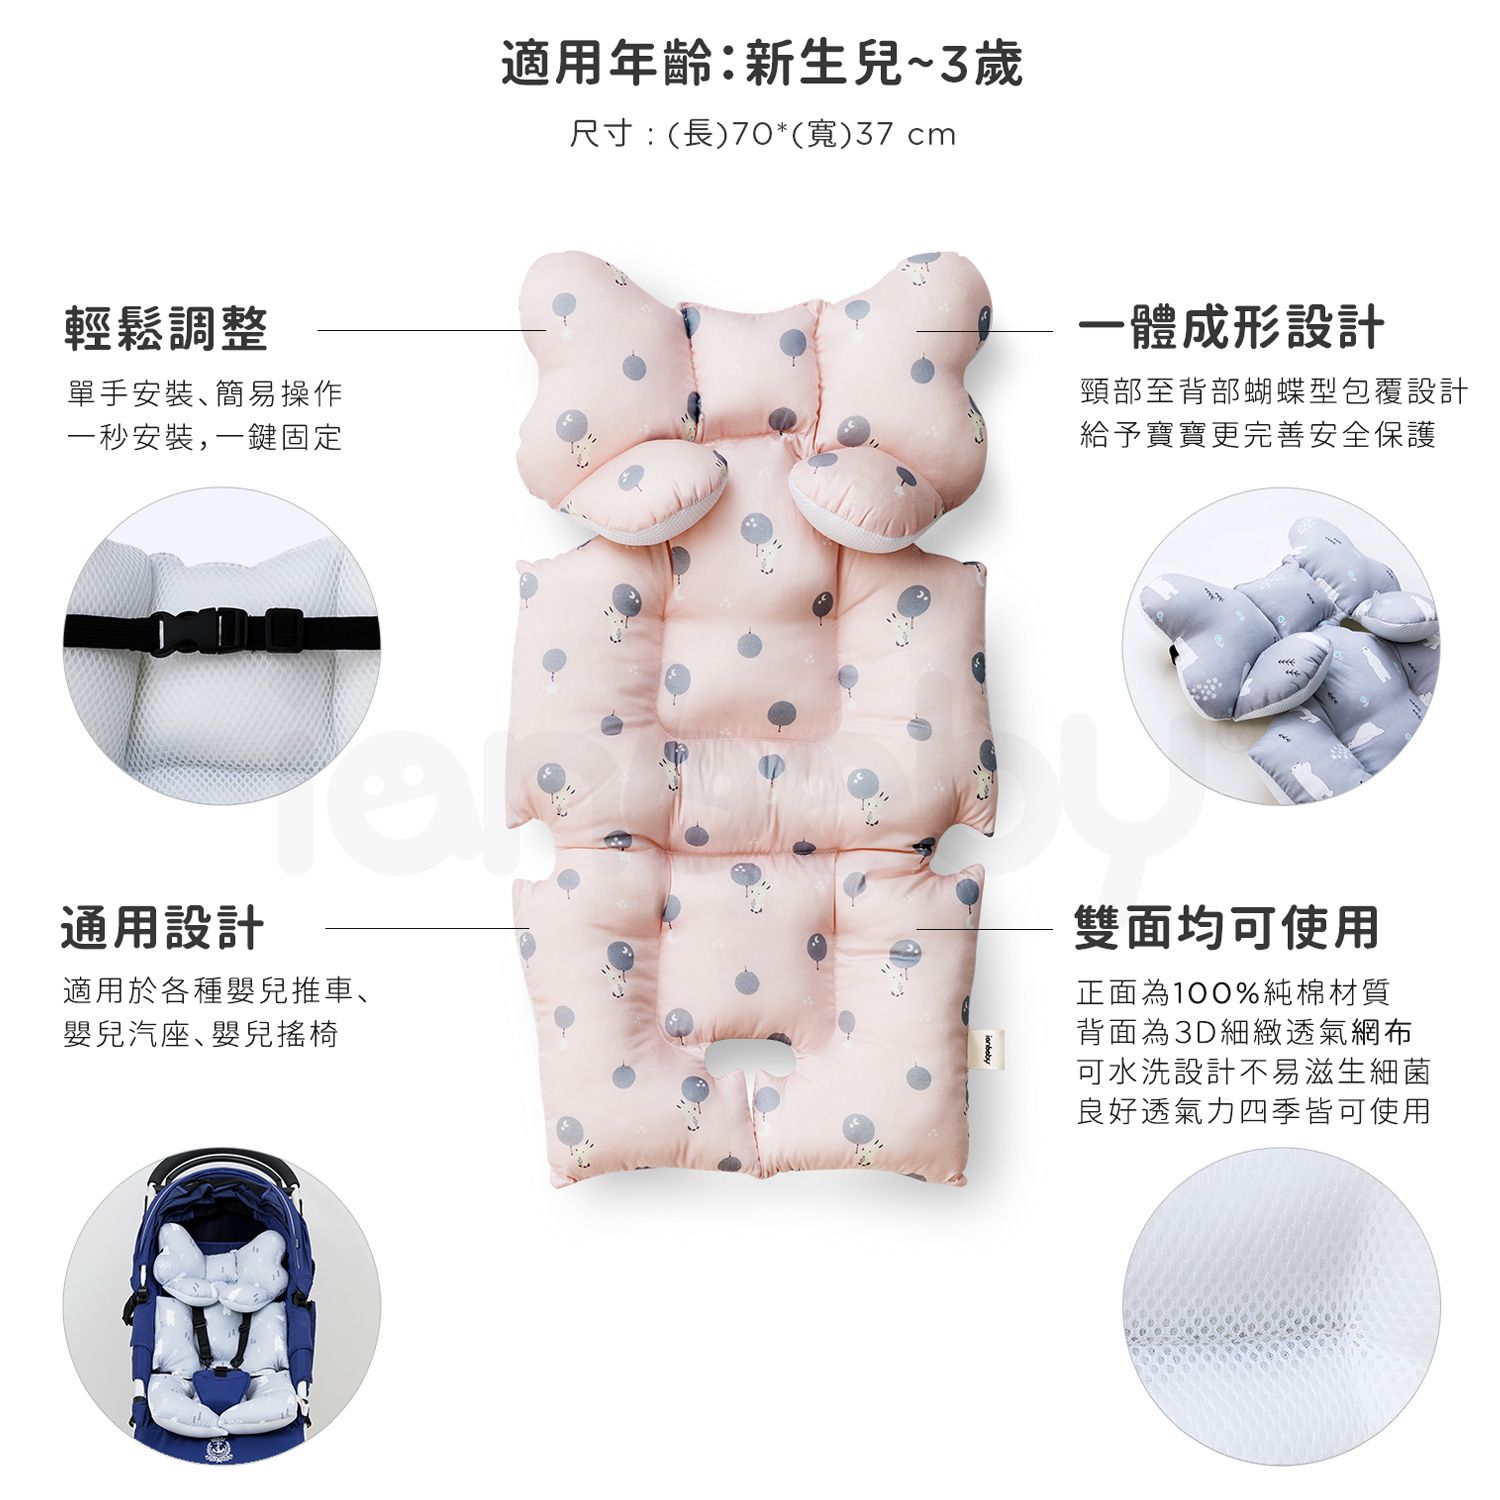 O-BS_05.jpg/ ianbaby 韓製全身包覆墊適用年齡為新生兒至3歲，尺寸為70cm*37cm，純棉與透氣網布雙面皆可使用，一體成形設計給予寶寶更完善安全的保護。